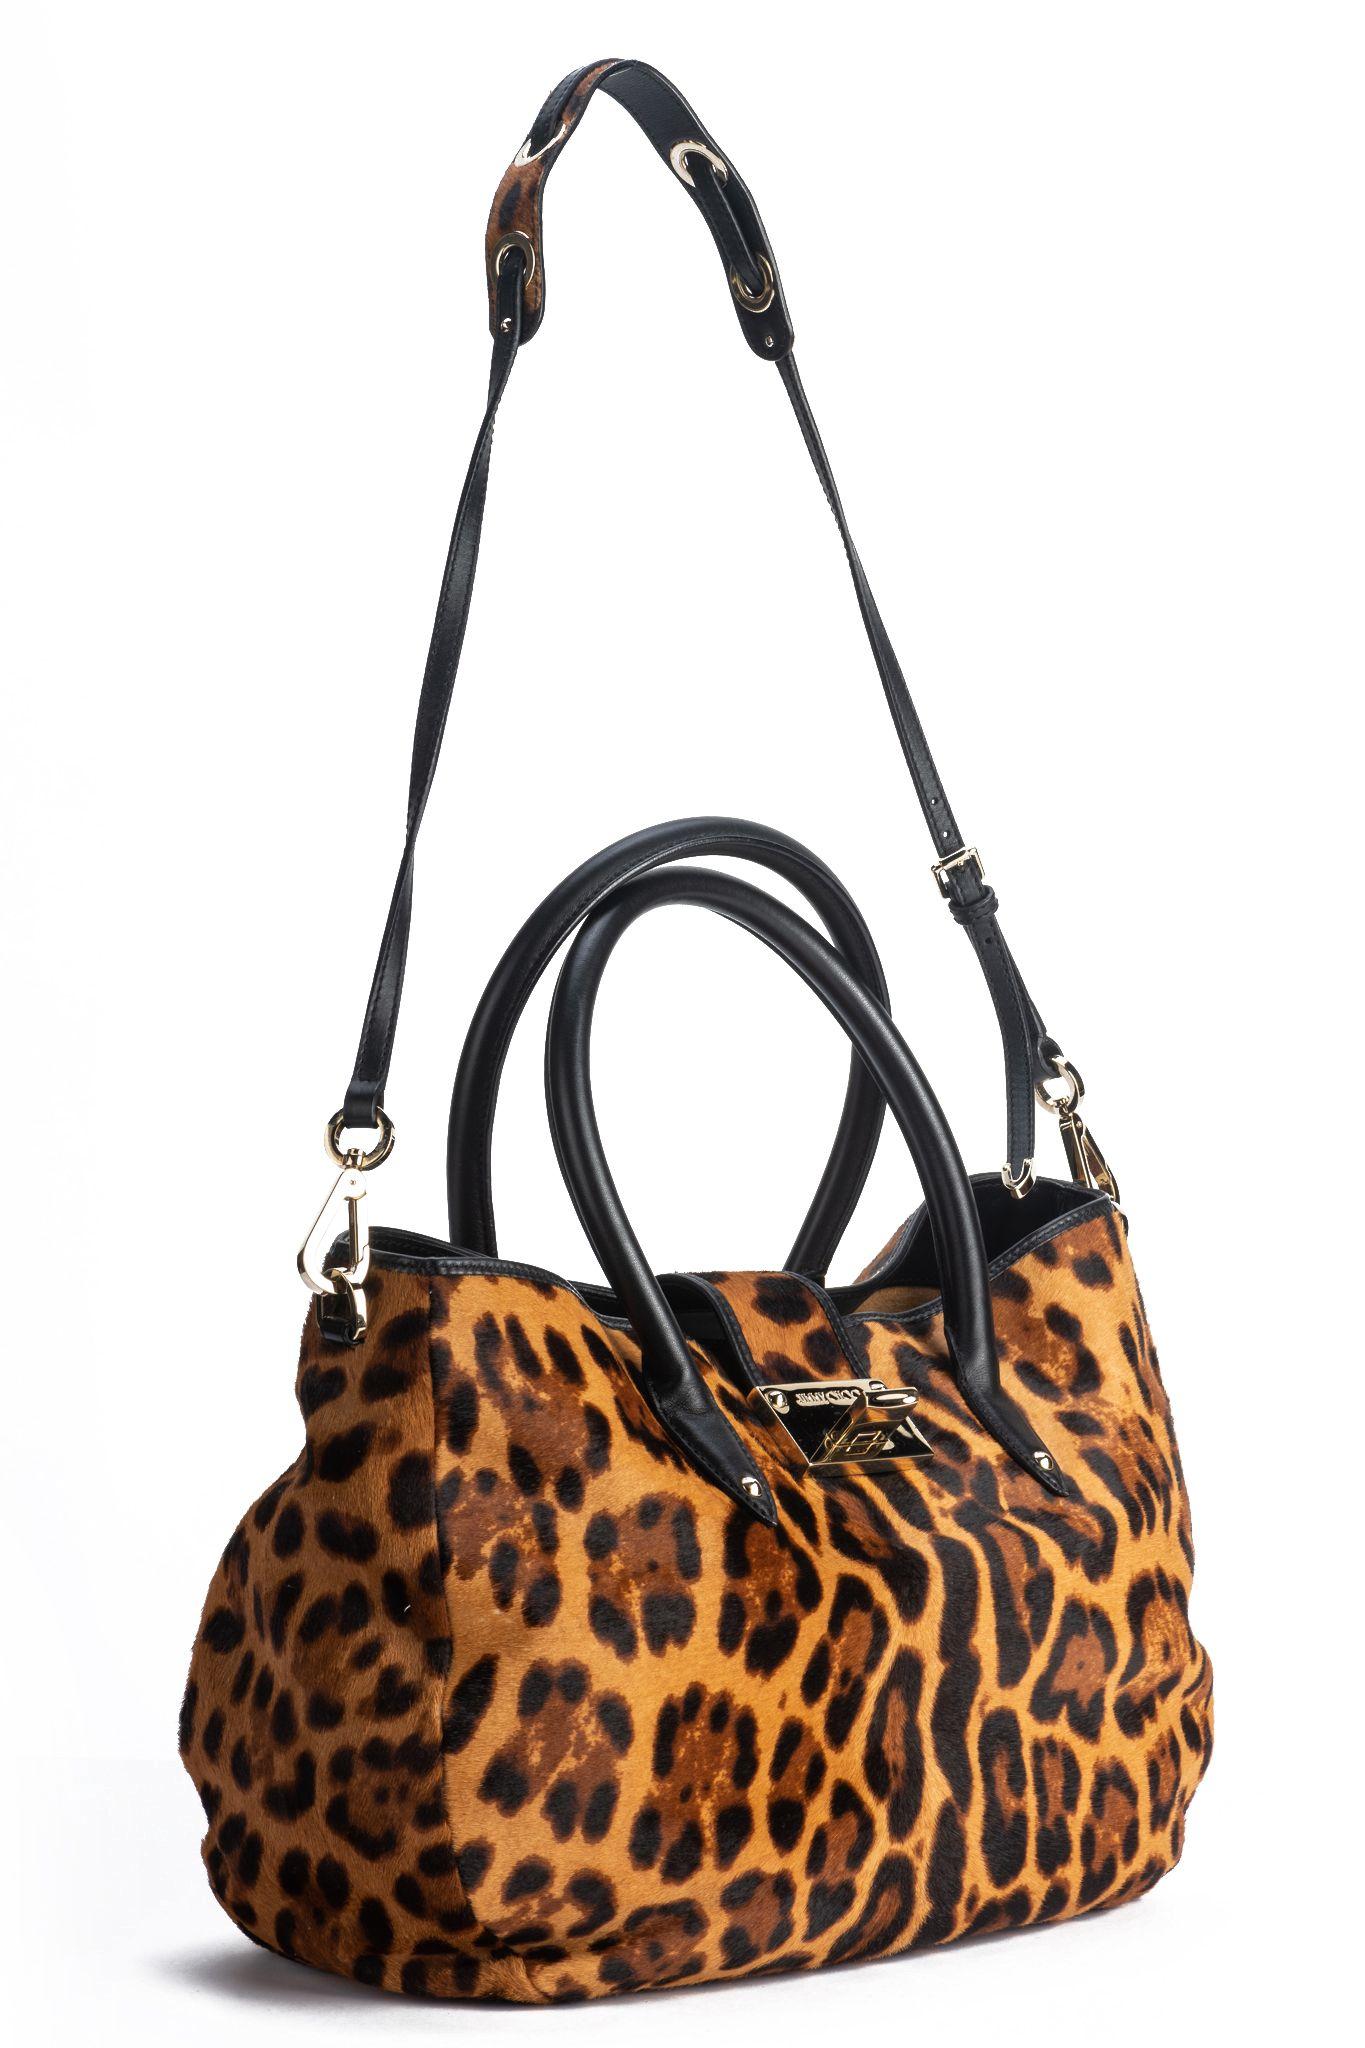 Jimmy Choo large cheetah print pony hair new handbag. Handle drop 6”, shoulder 18”. Original dust cover.